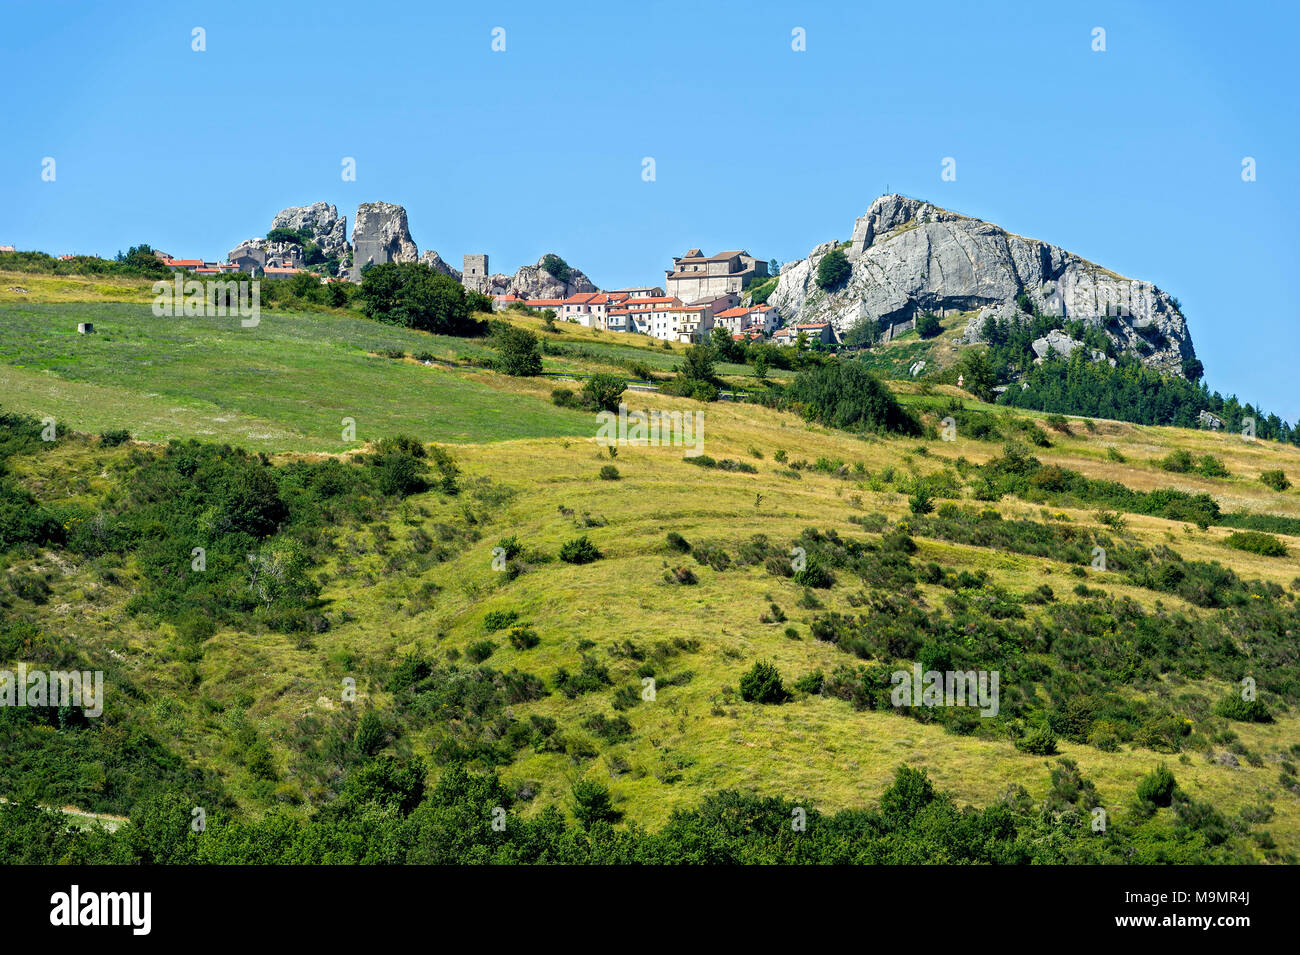 View of mountain village on rock Morg Caraceni, Pietrabbondante, Molise, Italy Stock Photo